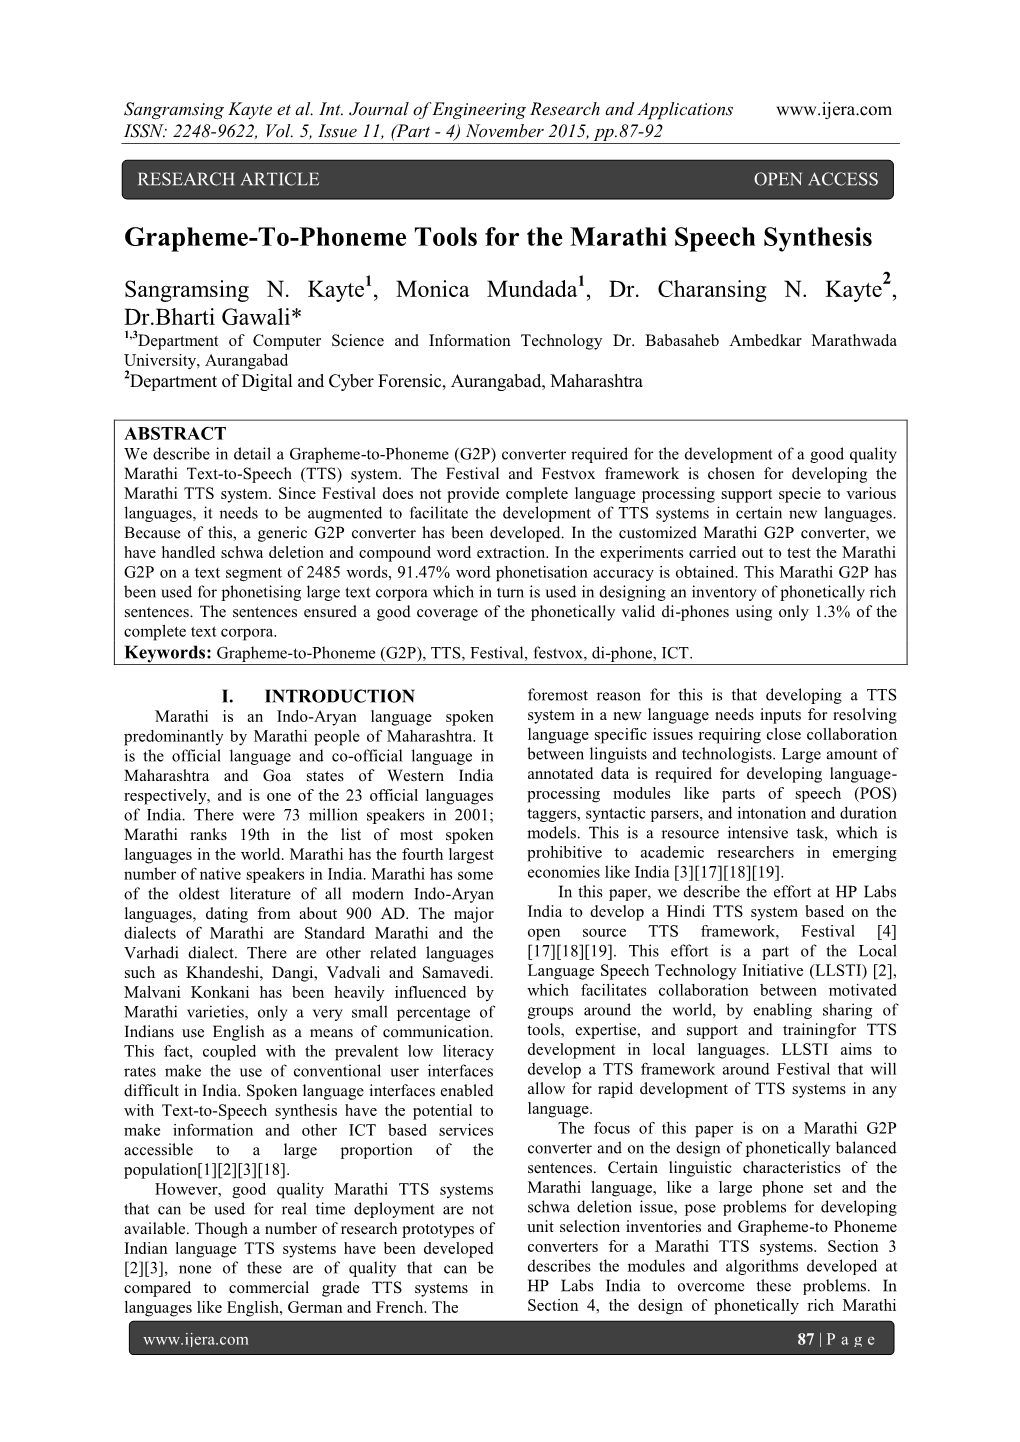 Grapheme-To-Phoneme Tools for the Marathi Speech Synthesis